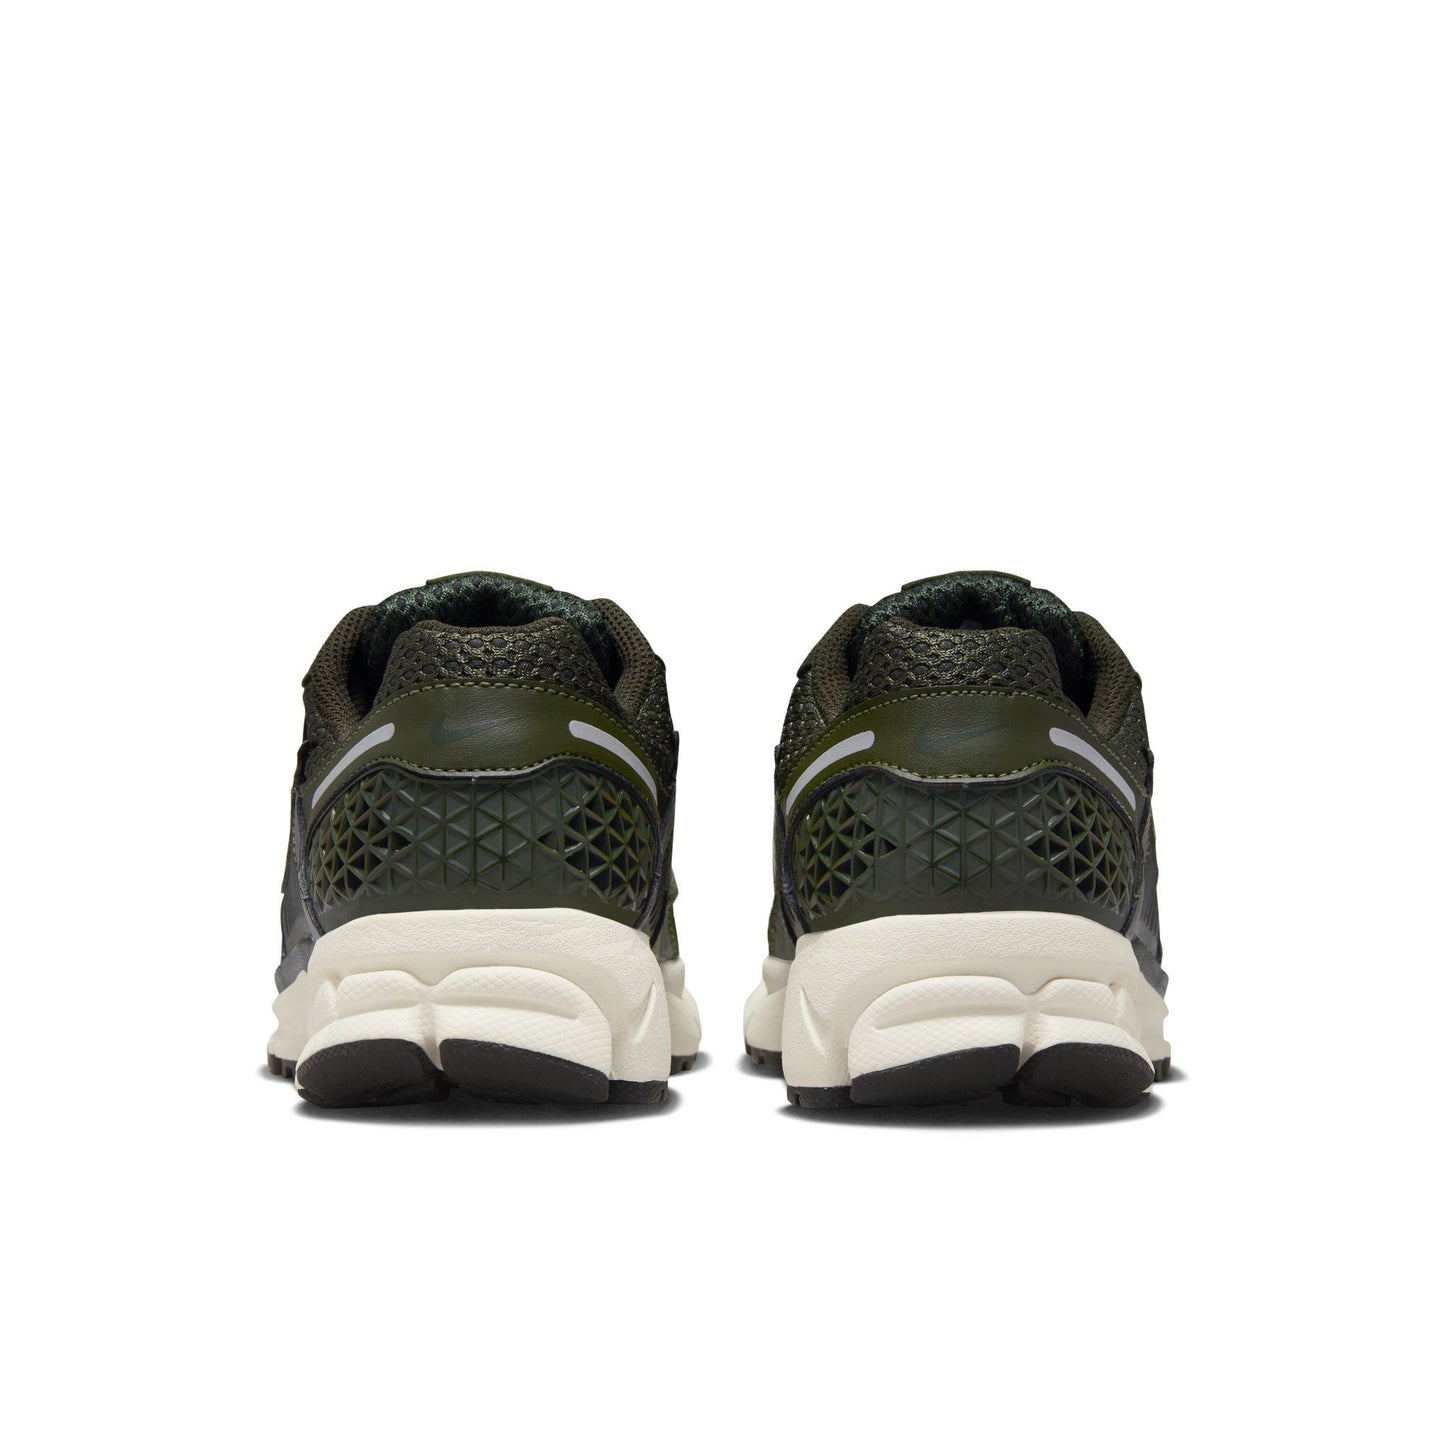 W Nike Zoom Vomero 5 "Sequoia" - FQ8898-325